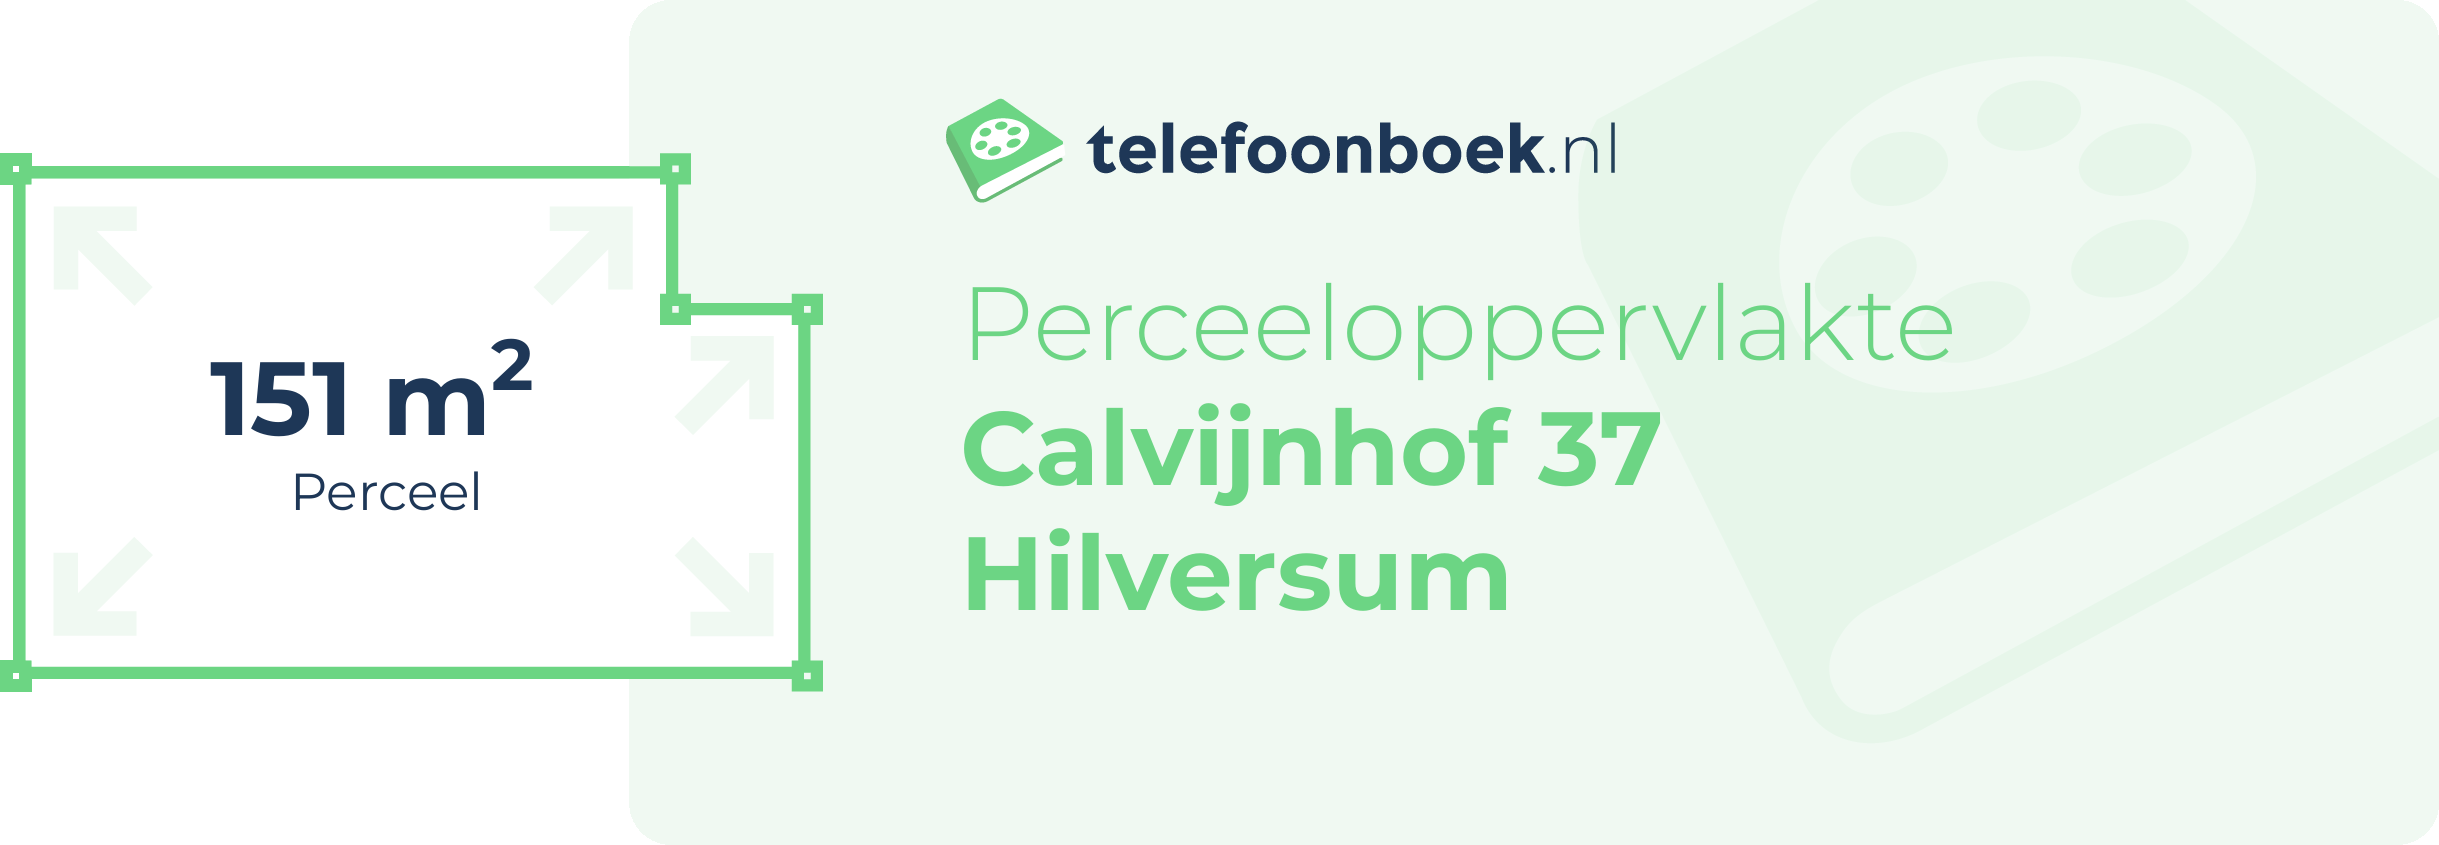 Perceeloppervlakte Calvijnhof 37 Hilversum